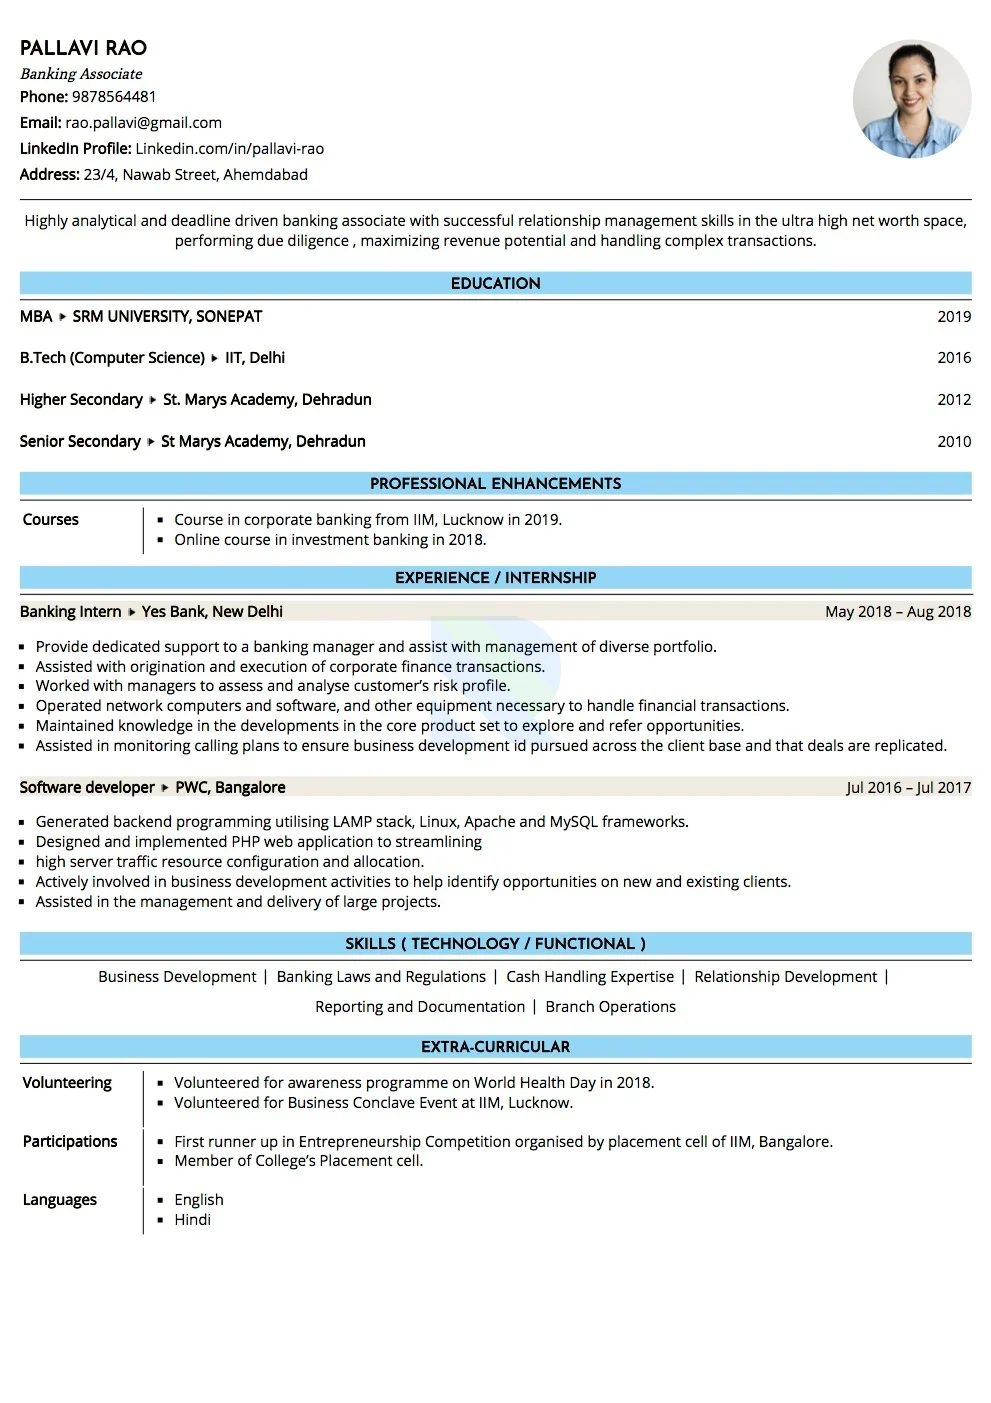 Sample Resume of Banking Associate  | Free Resume Templates & Samples on Resumod.co